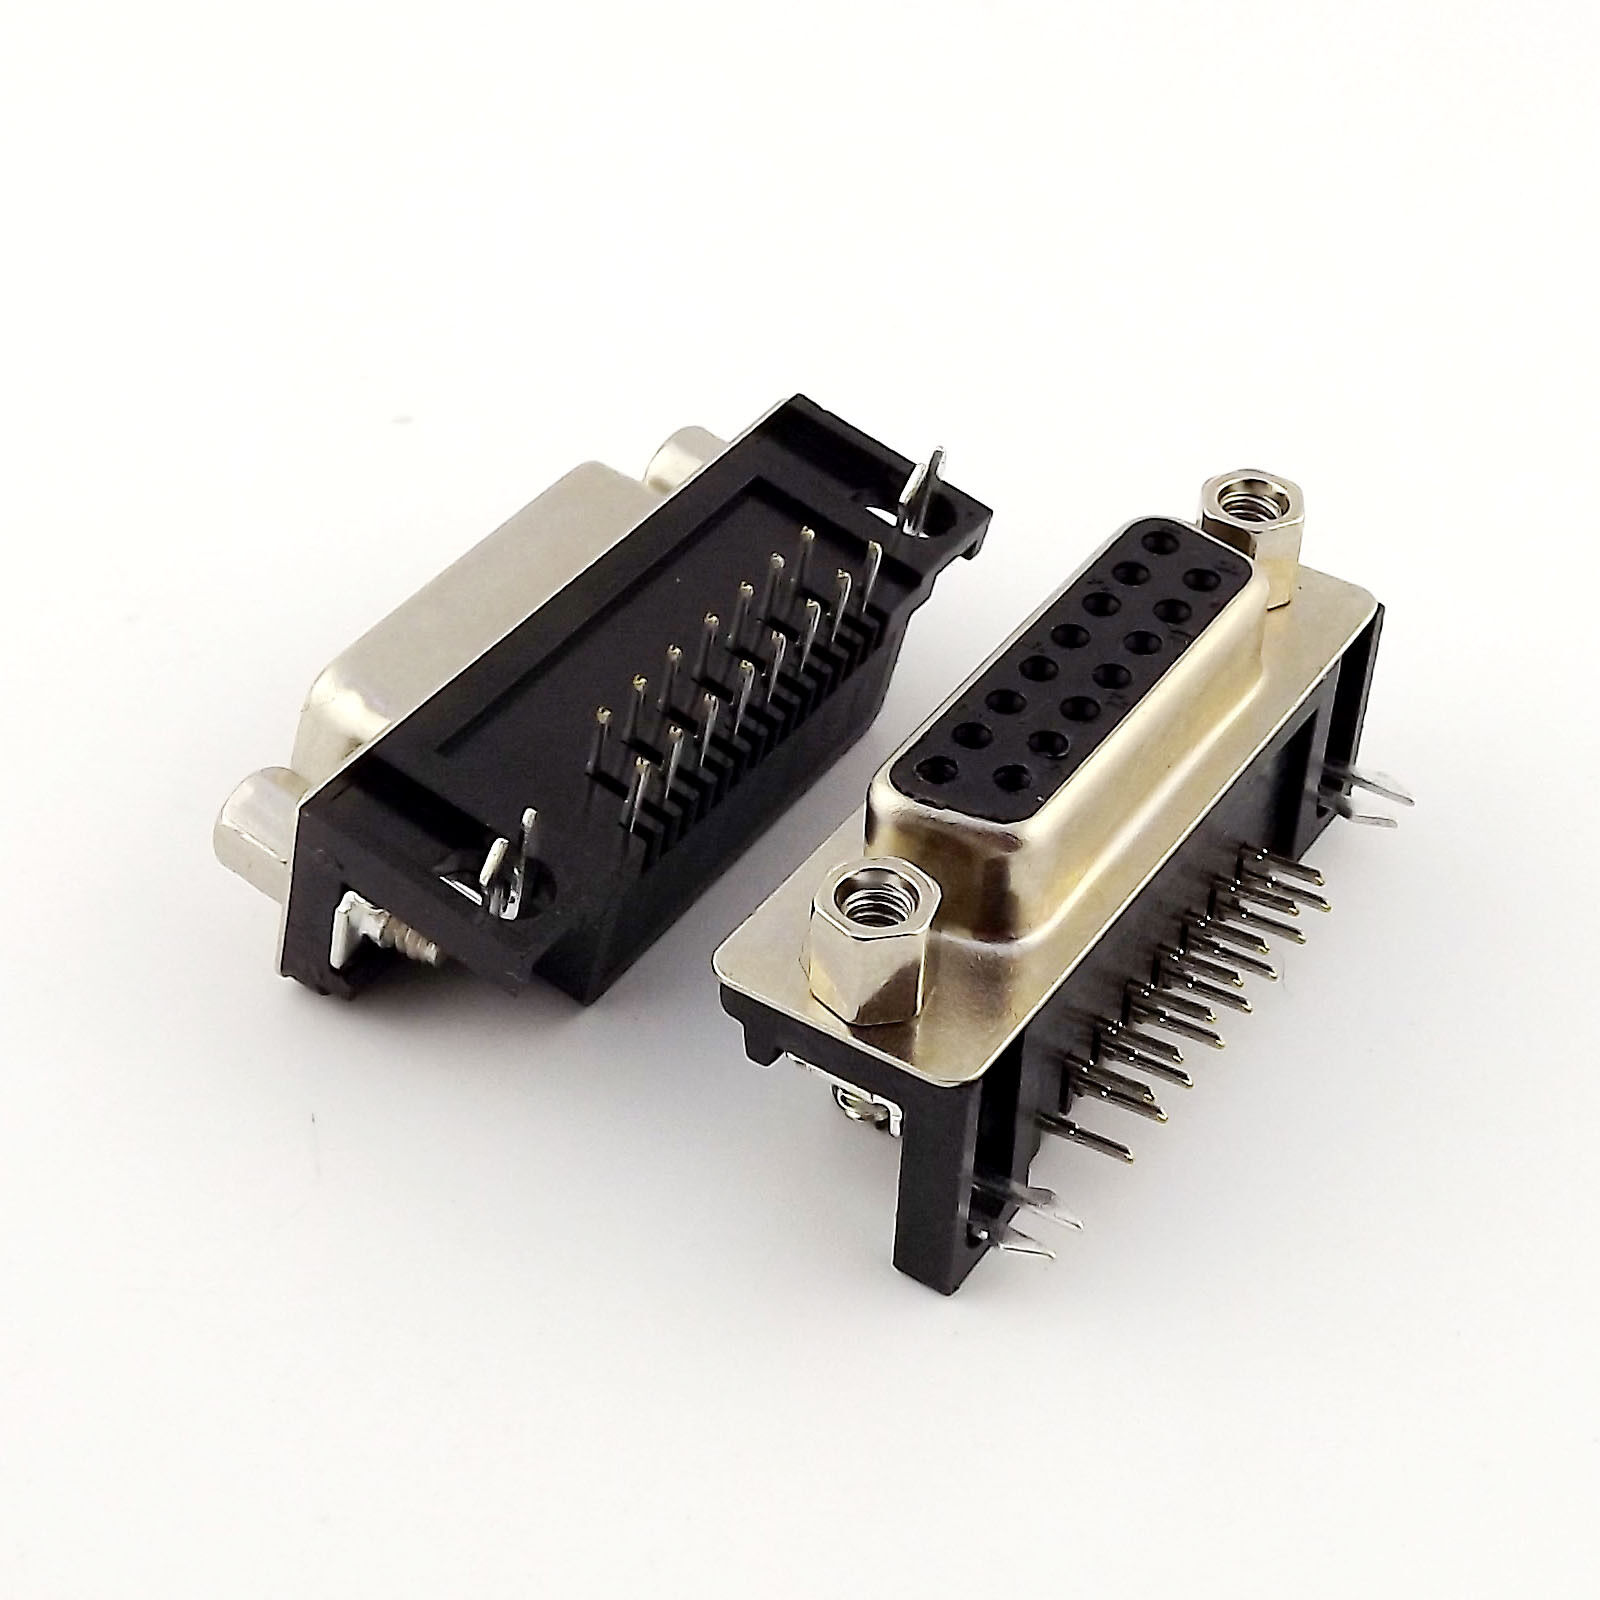 10x VGA DB15 15 Pin D-SUB 2 Rows Female Right Angle PCB Solder Connector Adapter